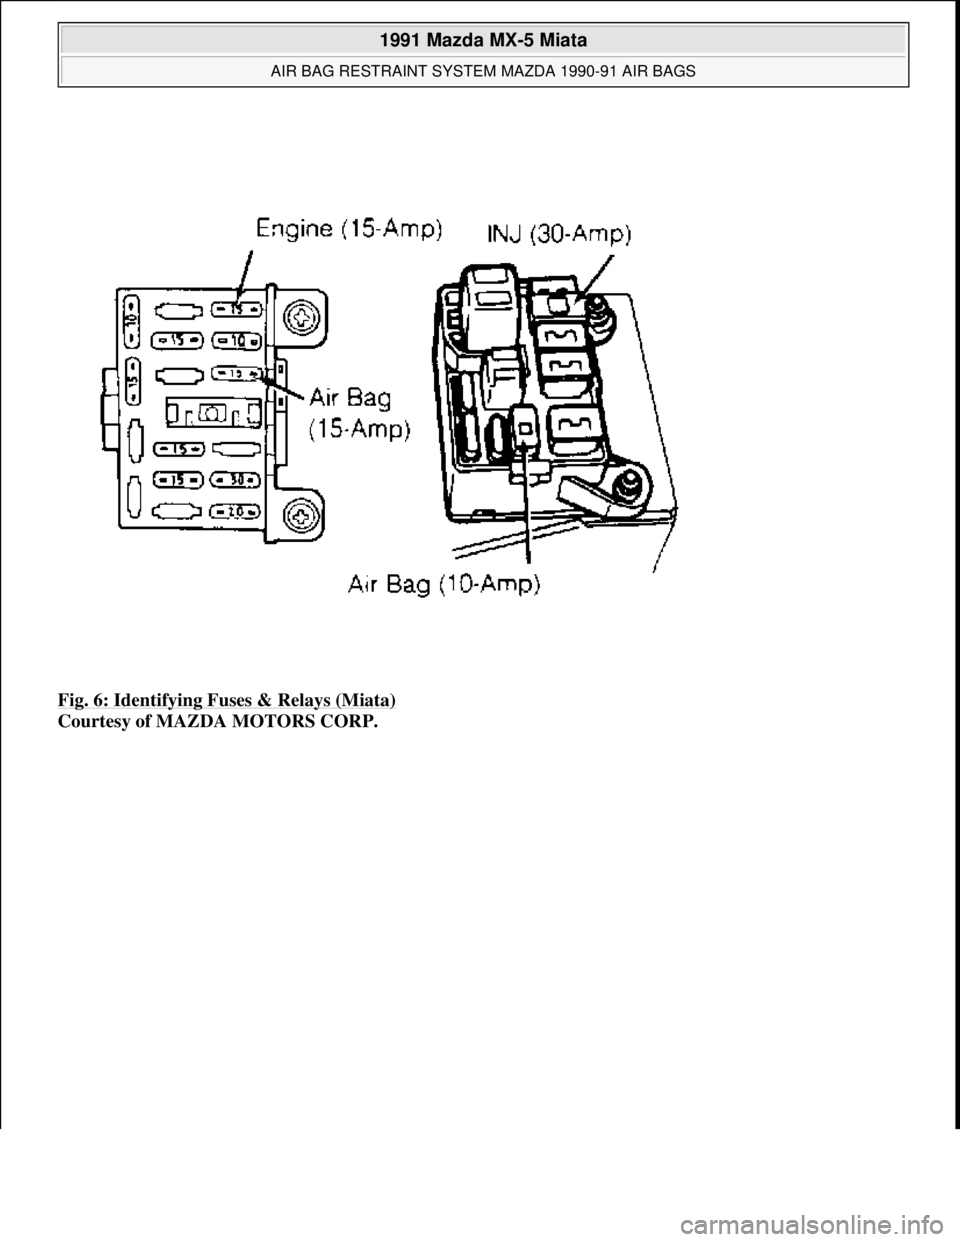 MAZDA MIATA 1991  Factory Service Manual Fig. 6: Identifying Fuses & Relays (Miata) 
Courtesy of MAZDA MOTORS CORP. 
 
1991 Mazda MX-5 Miata 
AIR BAG RESTRAINT SYSTEM MAZDA 1990-91 AIR BAGS  
Microsoft  
Sunday, July 05, 2009 2:11:16 PMPage 